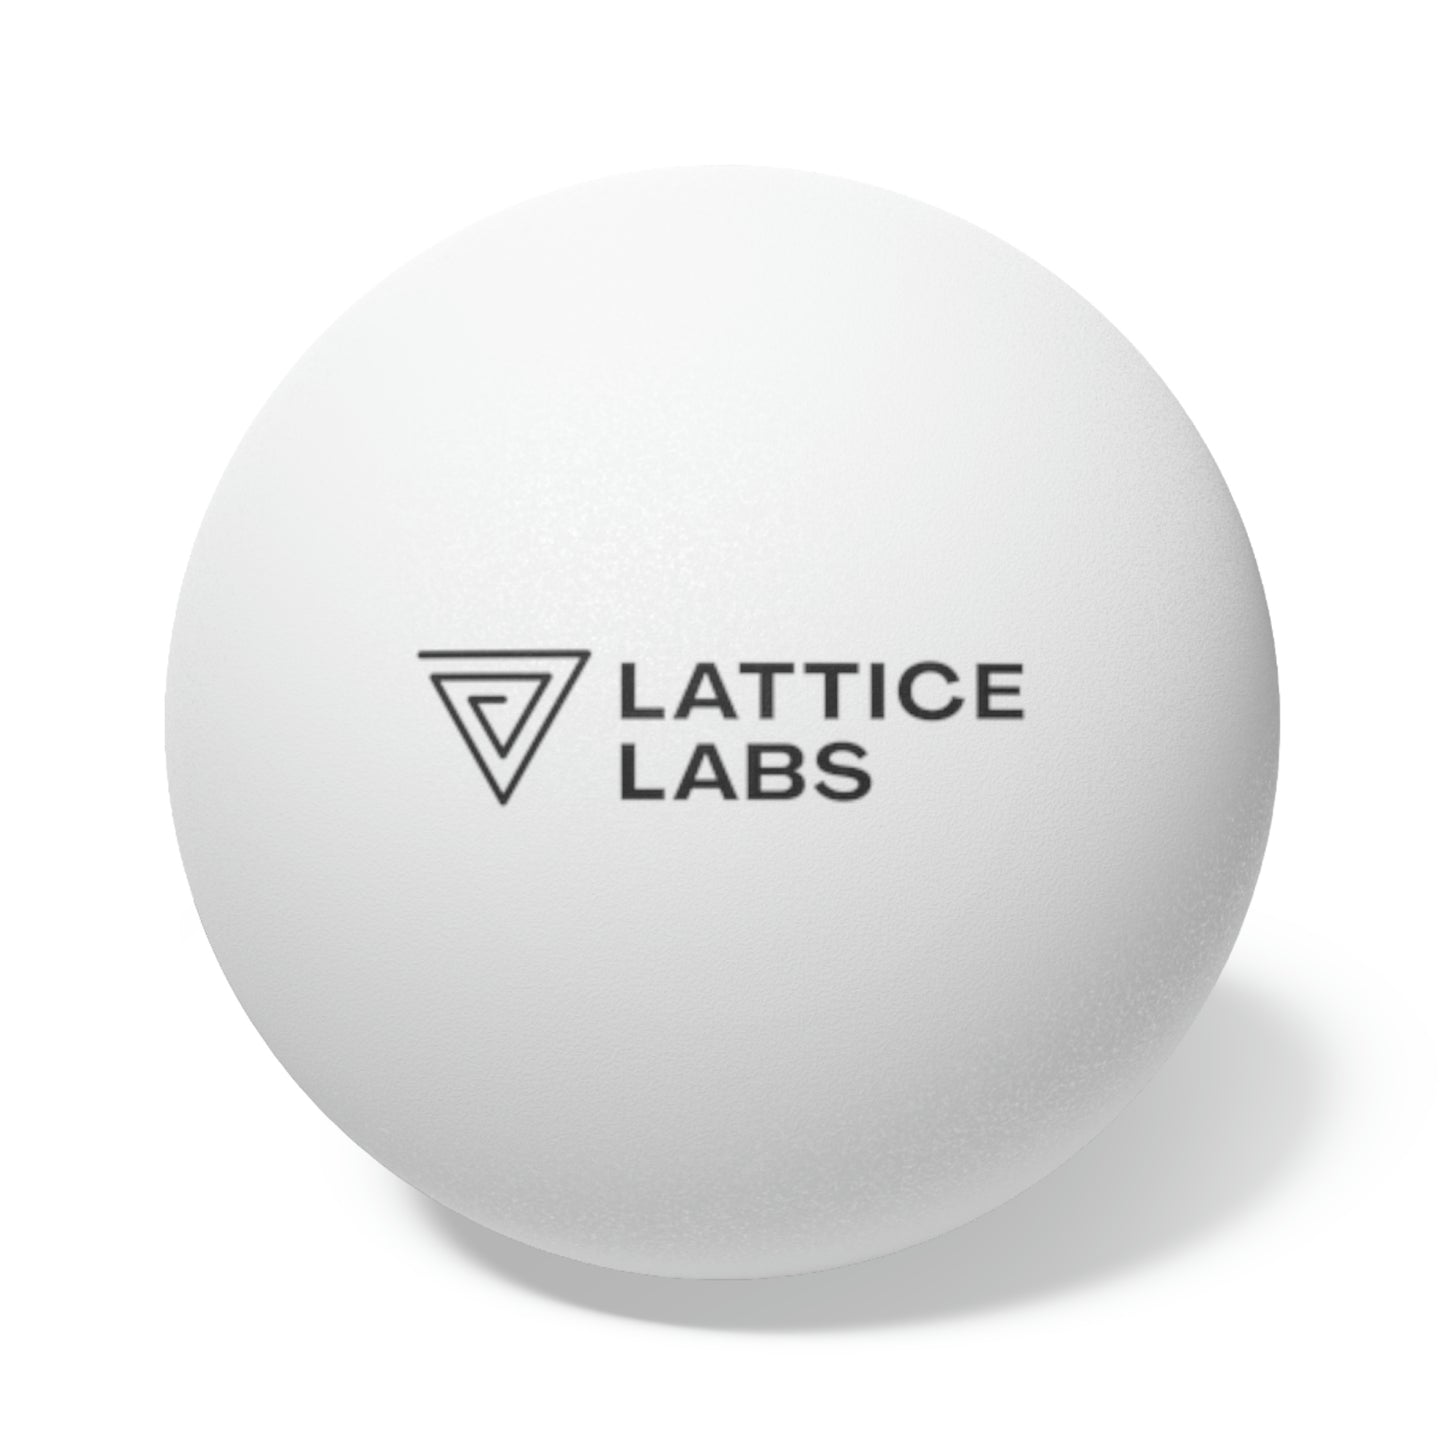 Lattice Labs Ping Pong Balls, 6 pcs